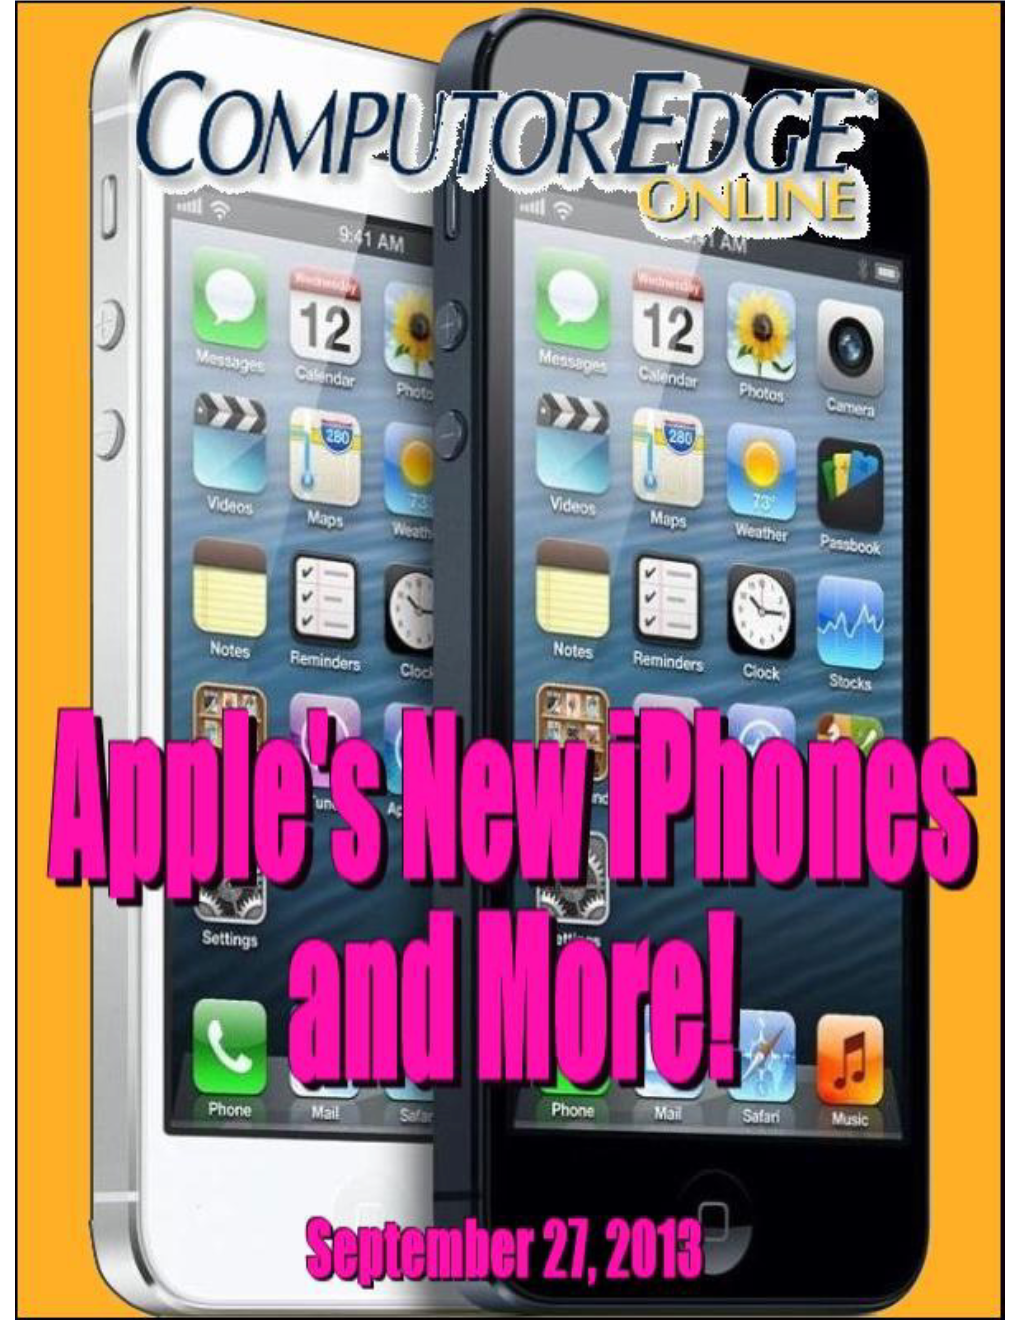 Computoredge 09/27/13: Apple's New Iphones and More!